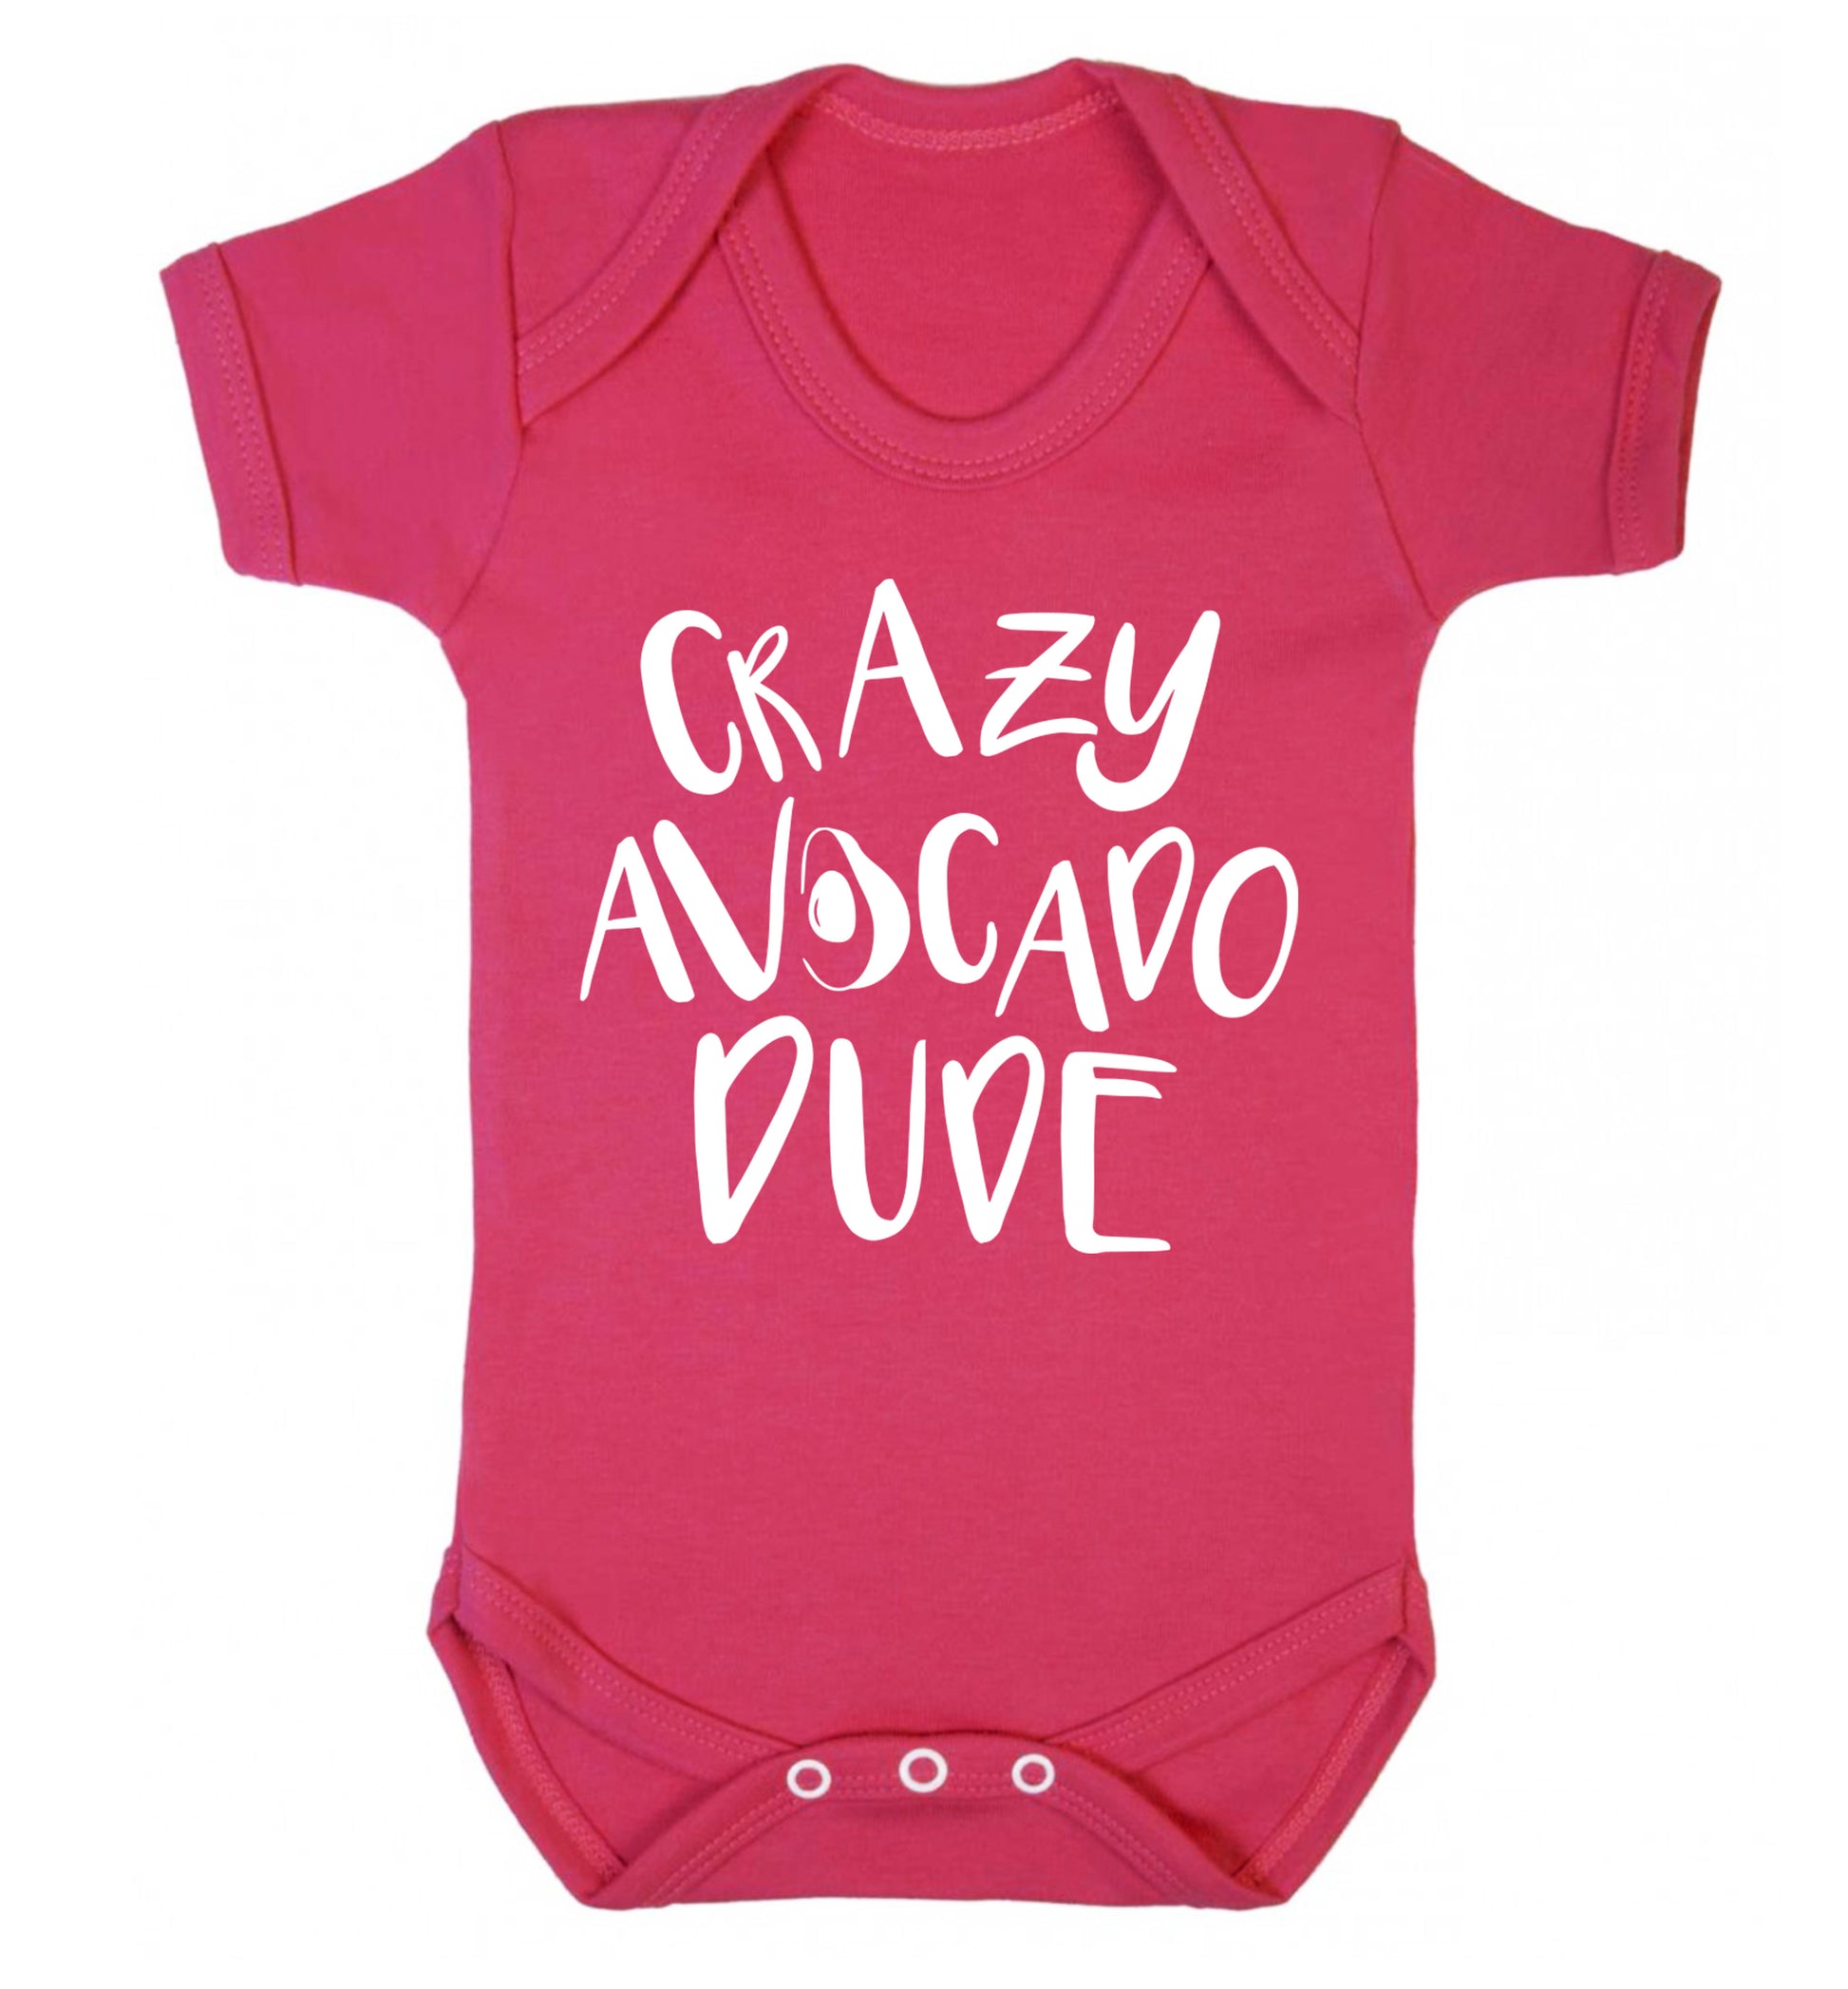 Crazy avocado dude Baby Vest dark pink 18-24 months